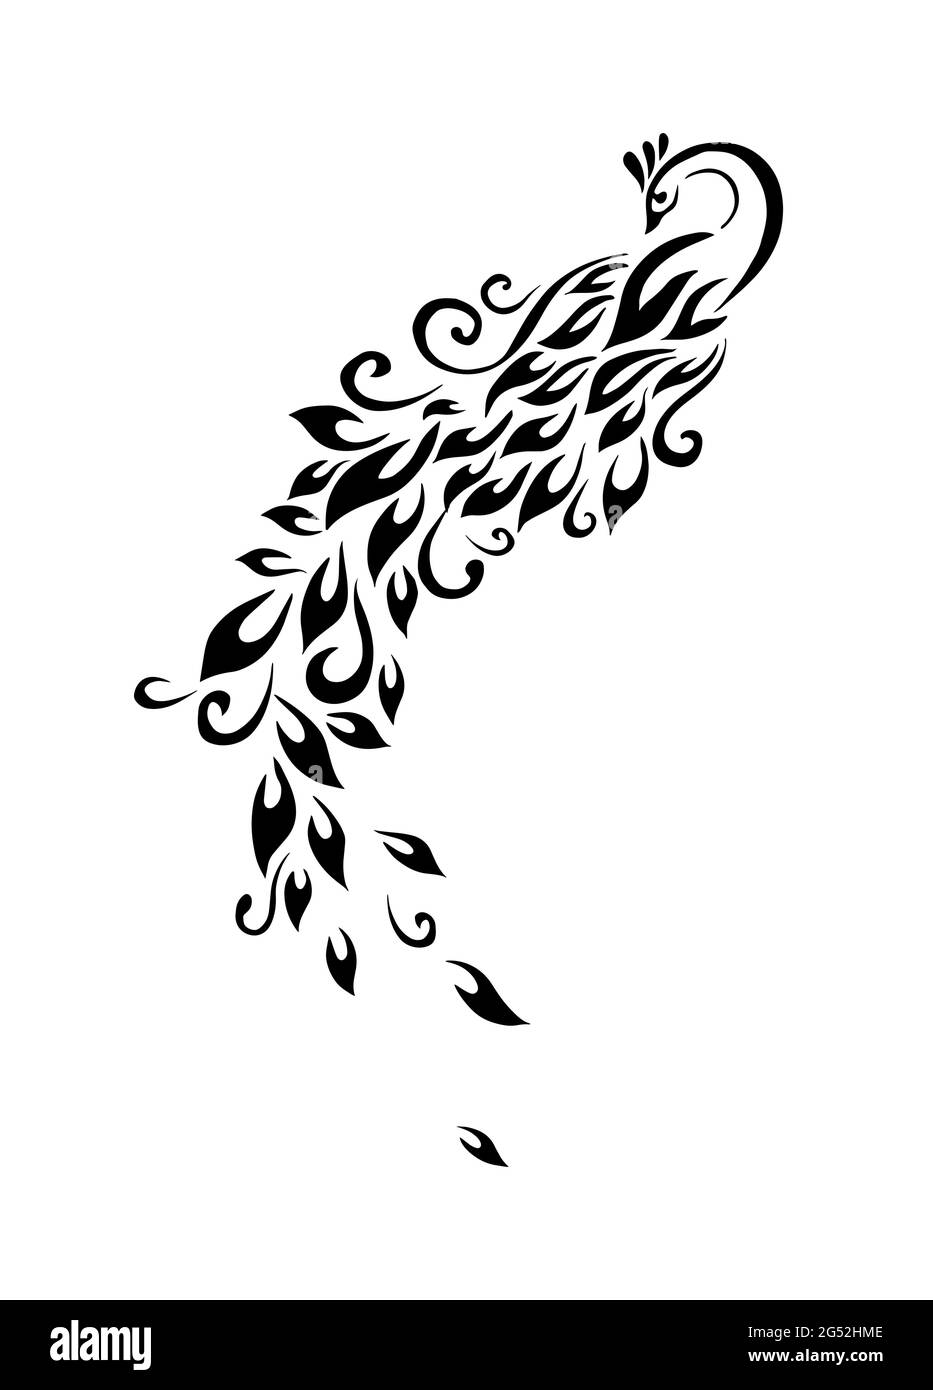 shabby-locust2: Manly peacock tattoo